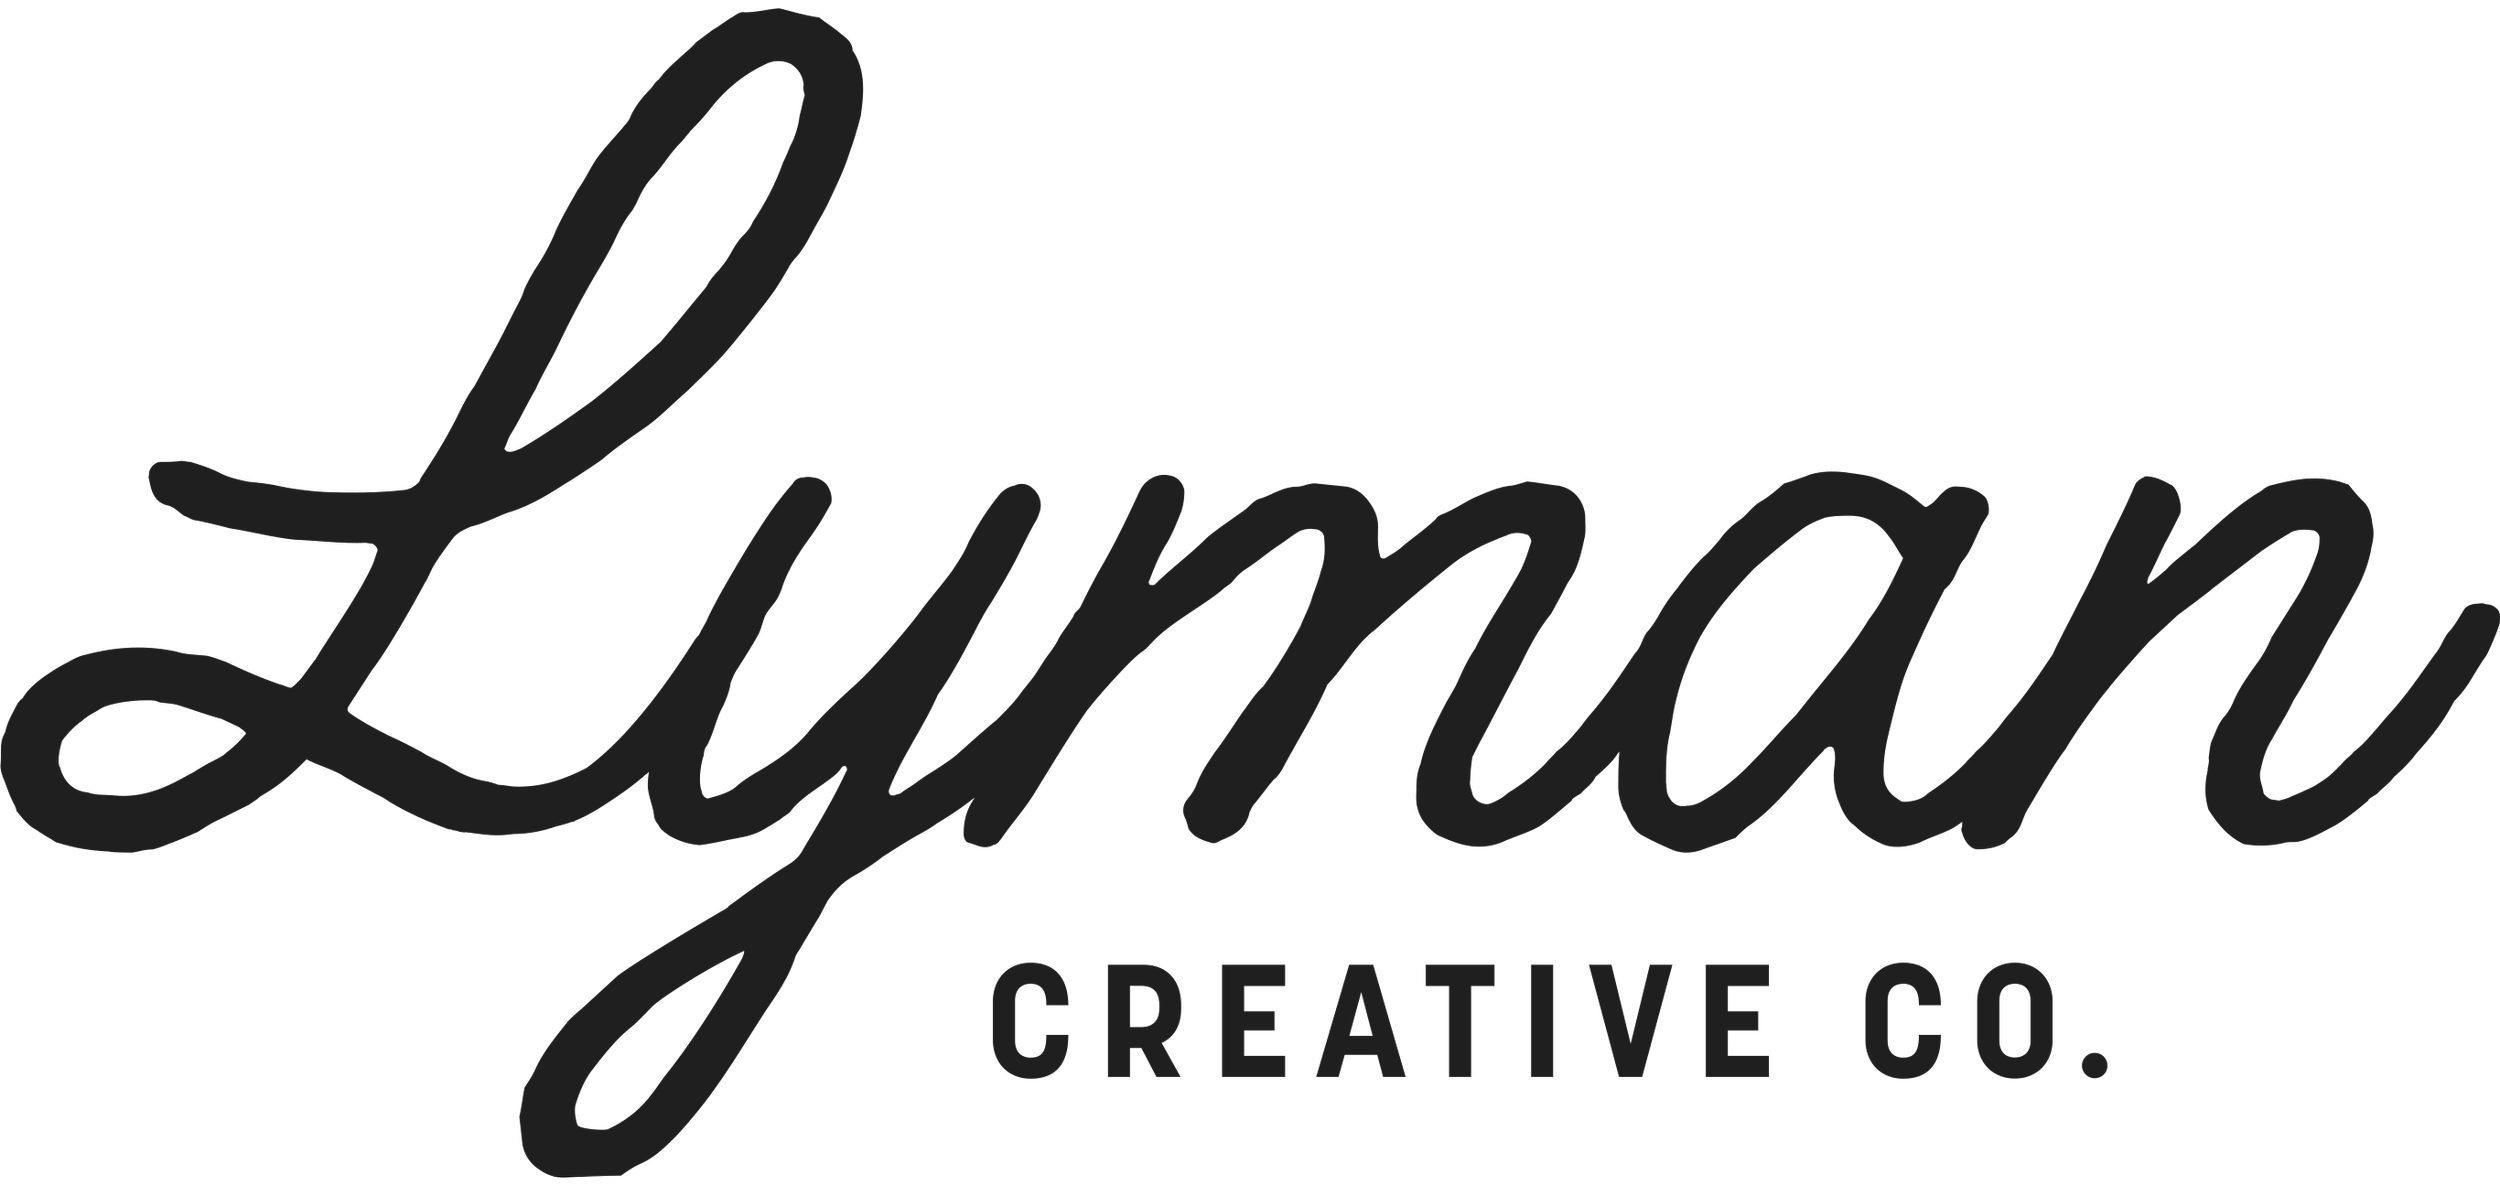 Lyman Creative Co.